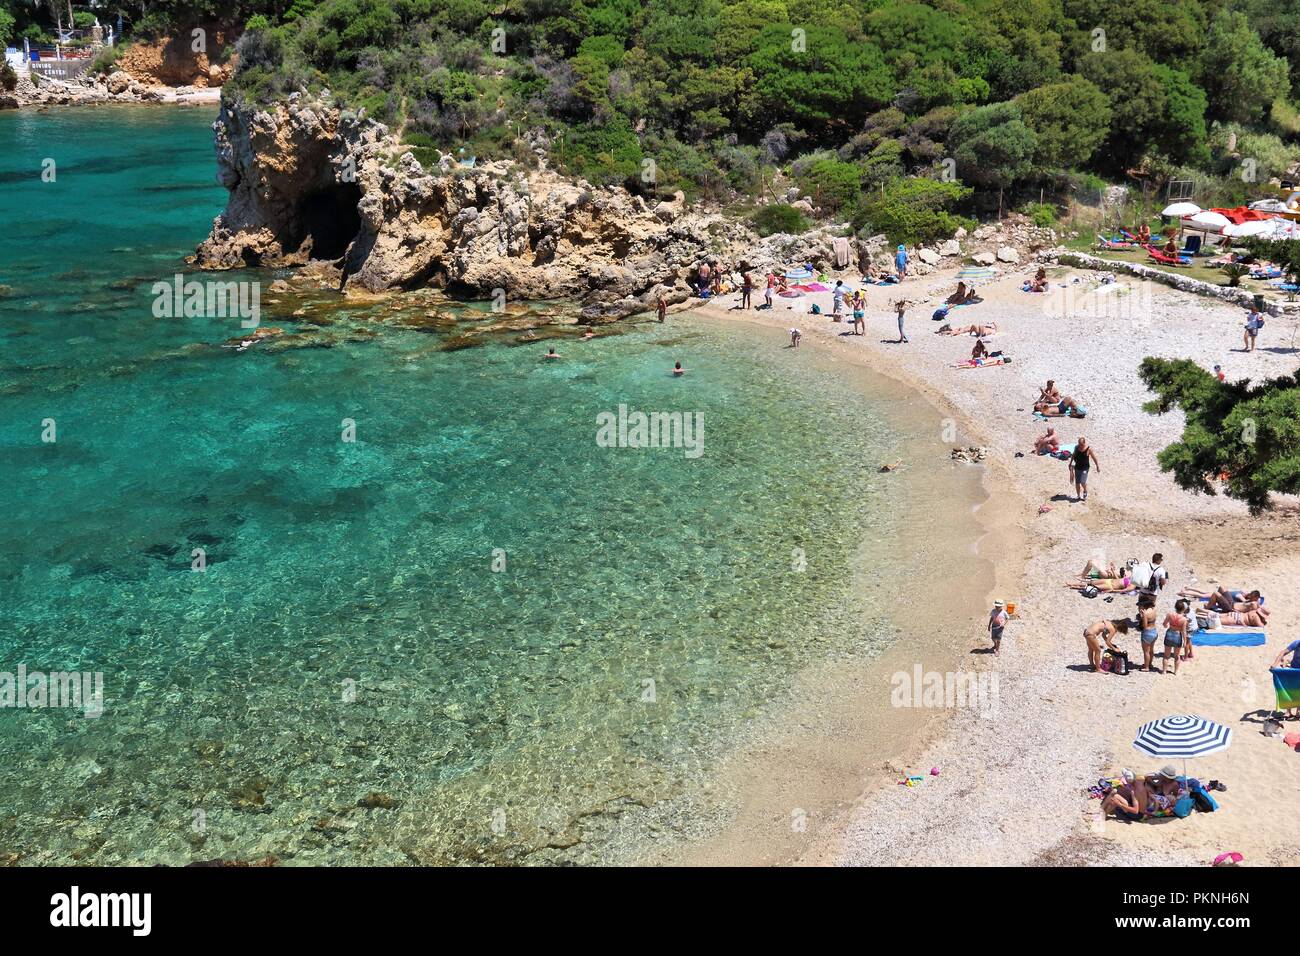 CORFU, GREECE - JUNE 2, 2016: People enjoy the beach in Paleokastritsa, Corfu Island, Greece. 558,000 tourists visited Corfu in 2012. Stock Photo